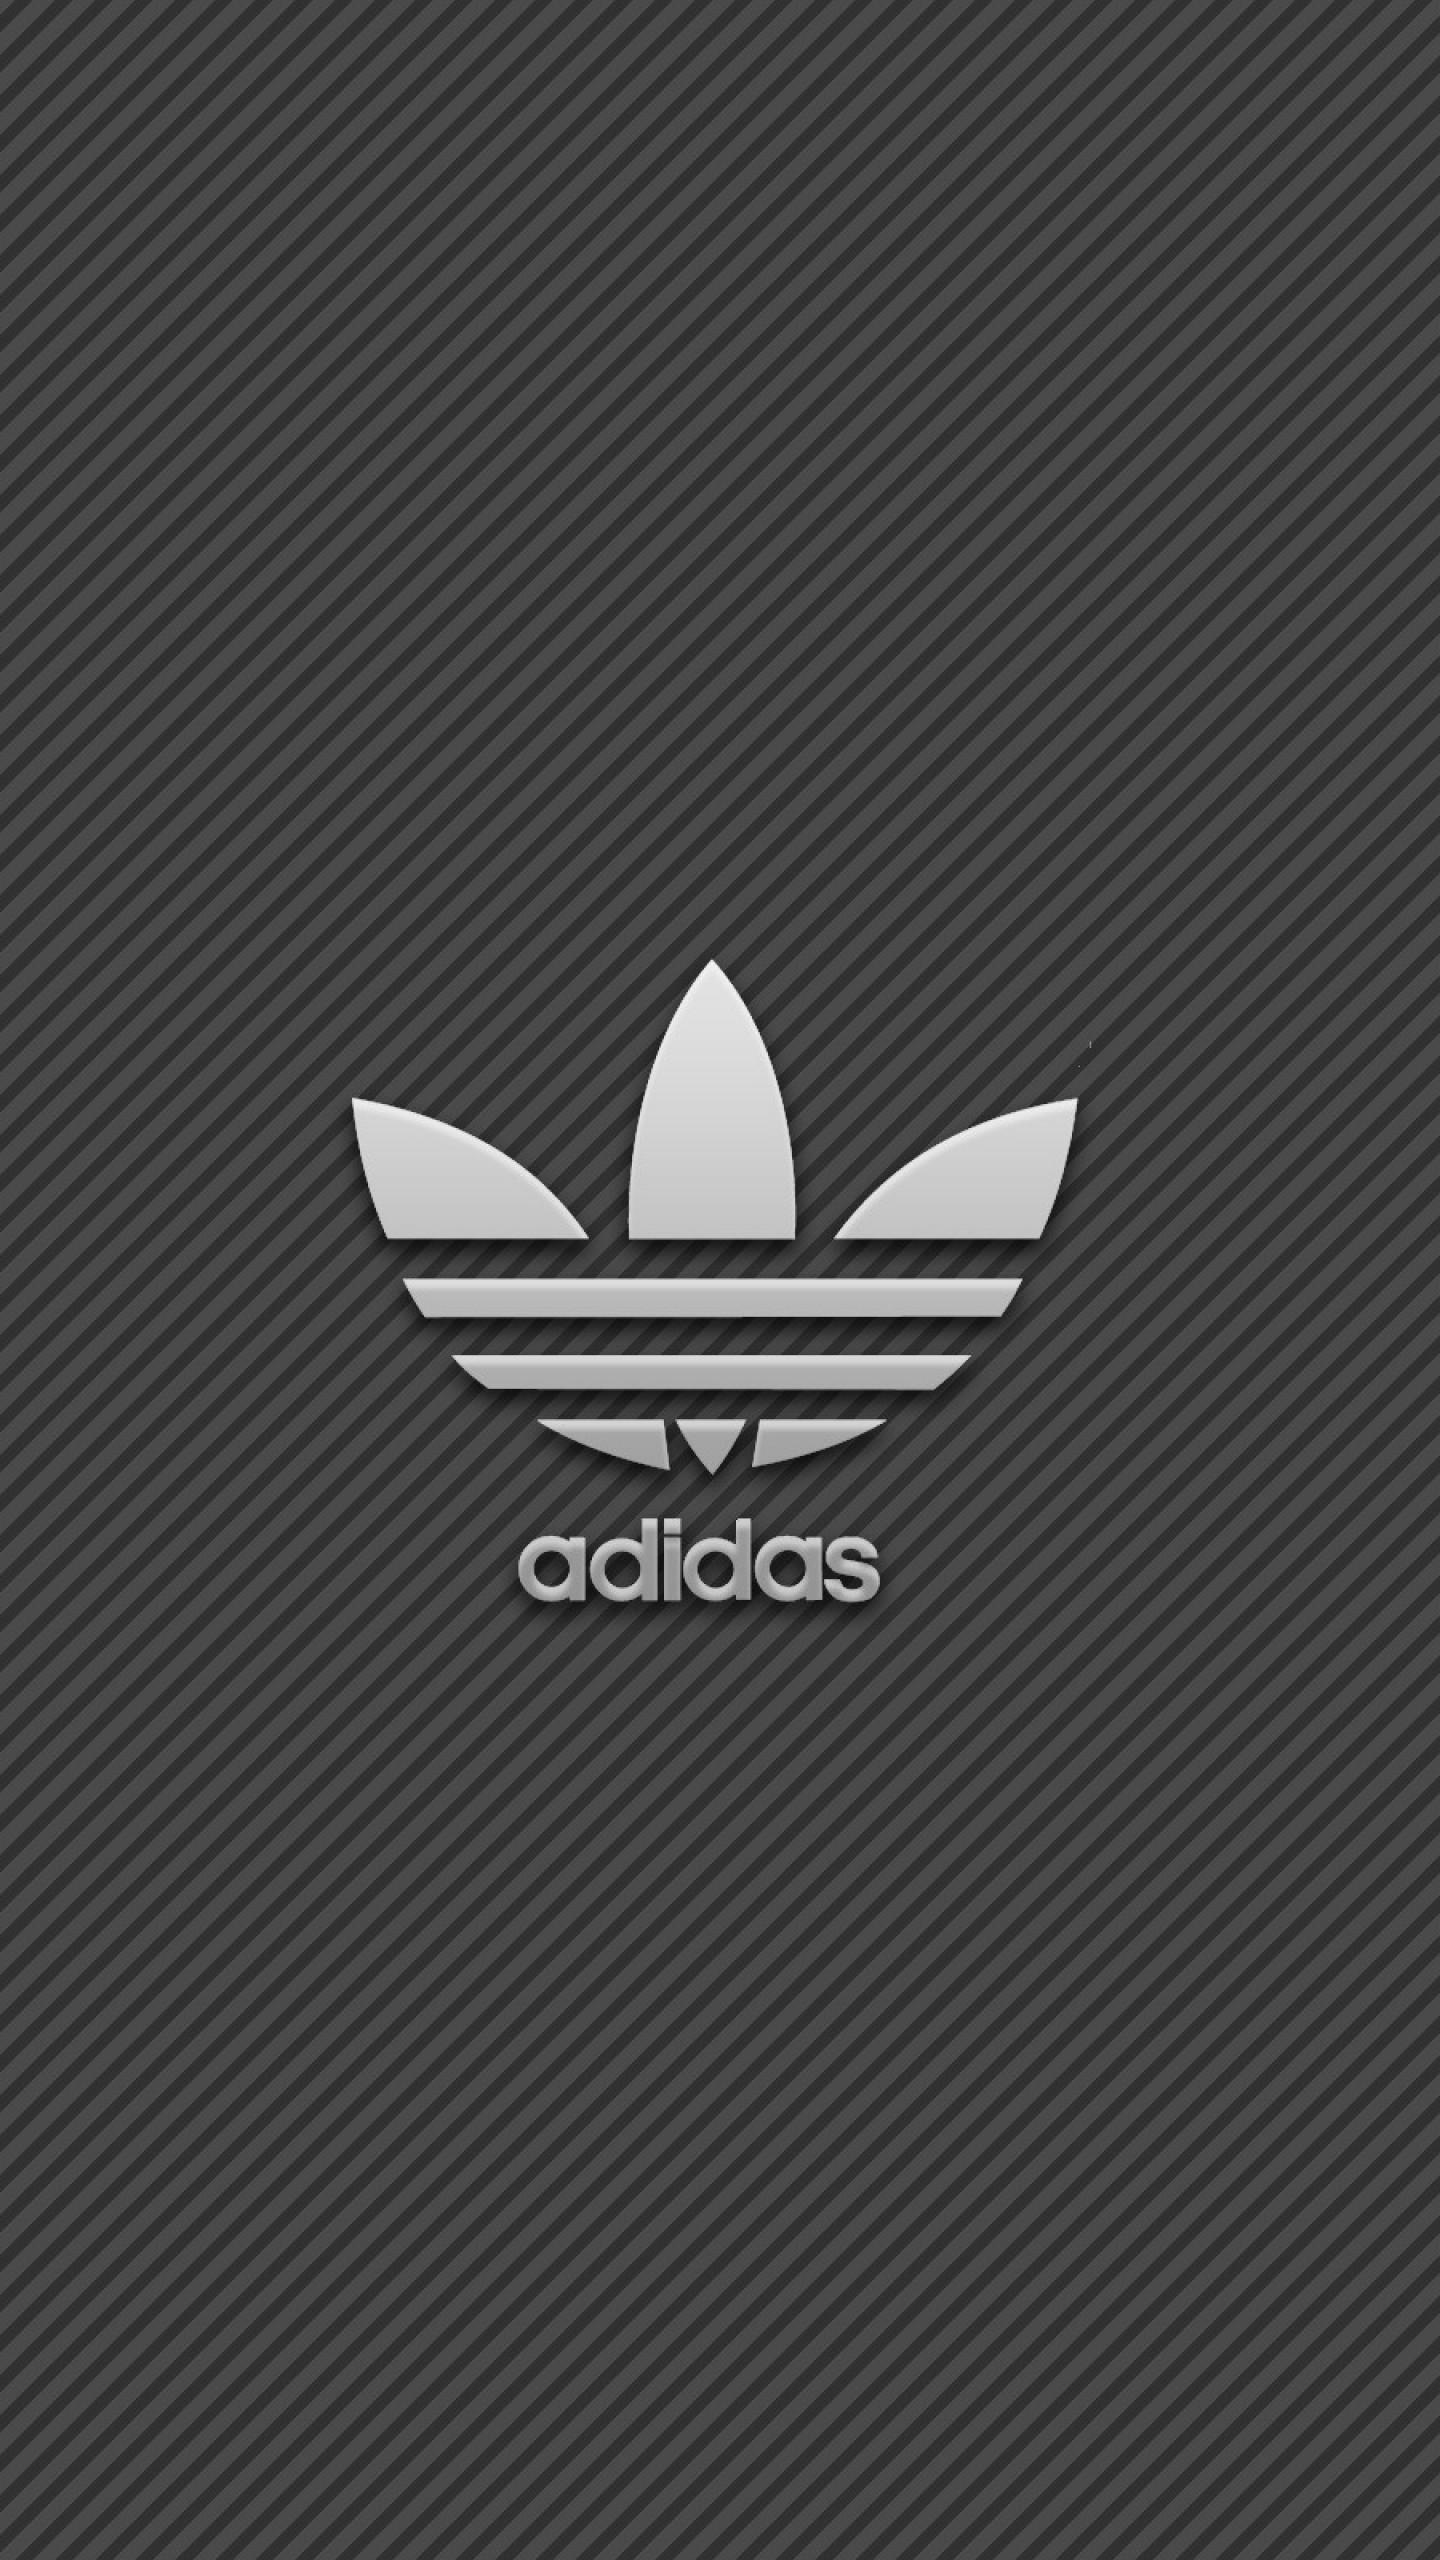 Adidas Originals Logo Png For Kids - Adidas Wallpaper Iphone X Transparent  PNG - 600x600 - Free Download on NicePNG